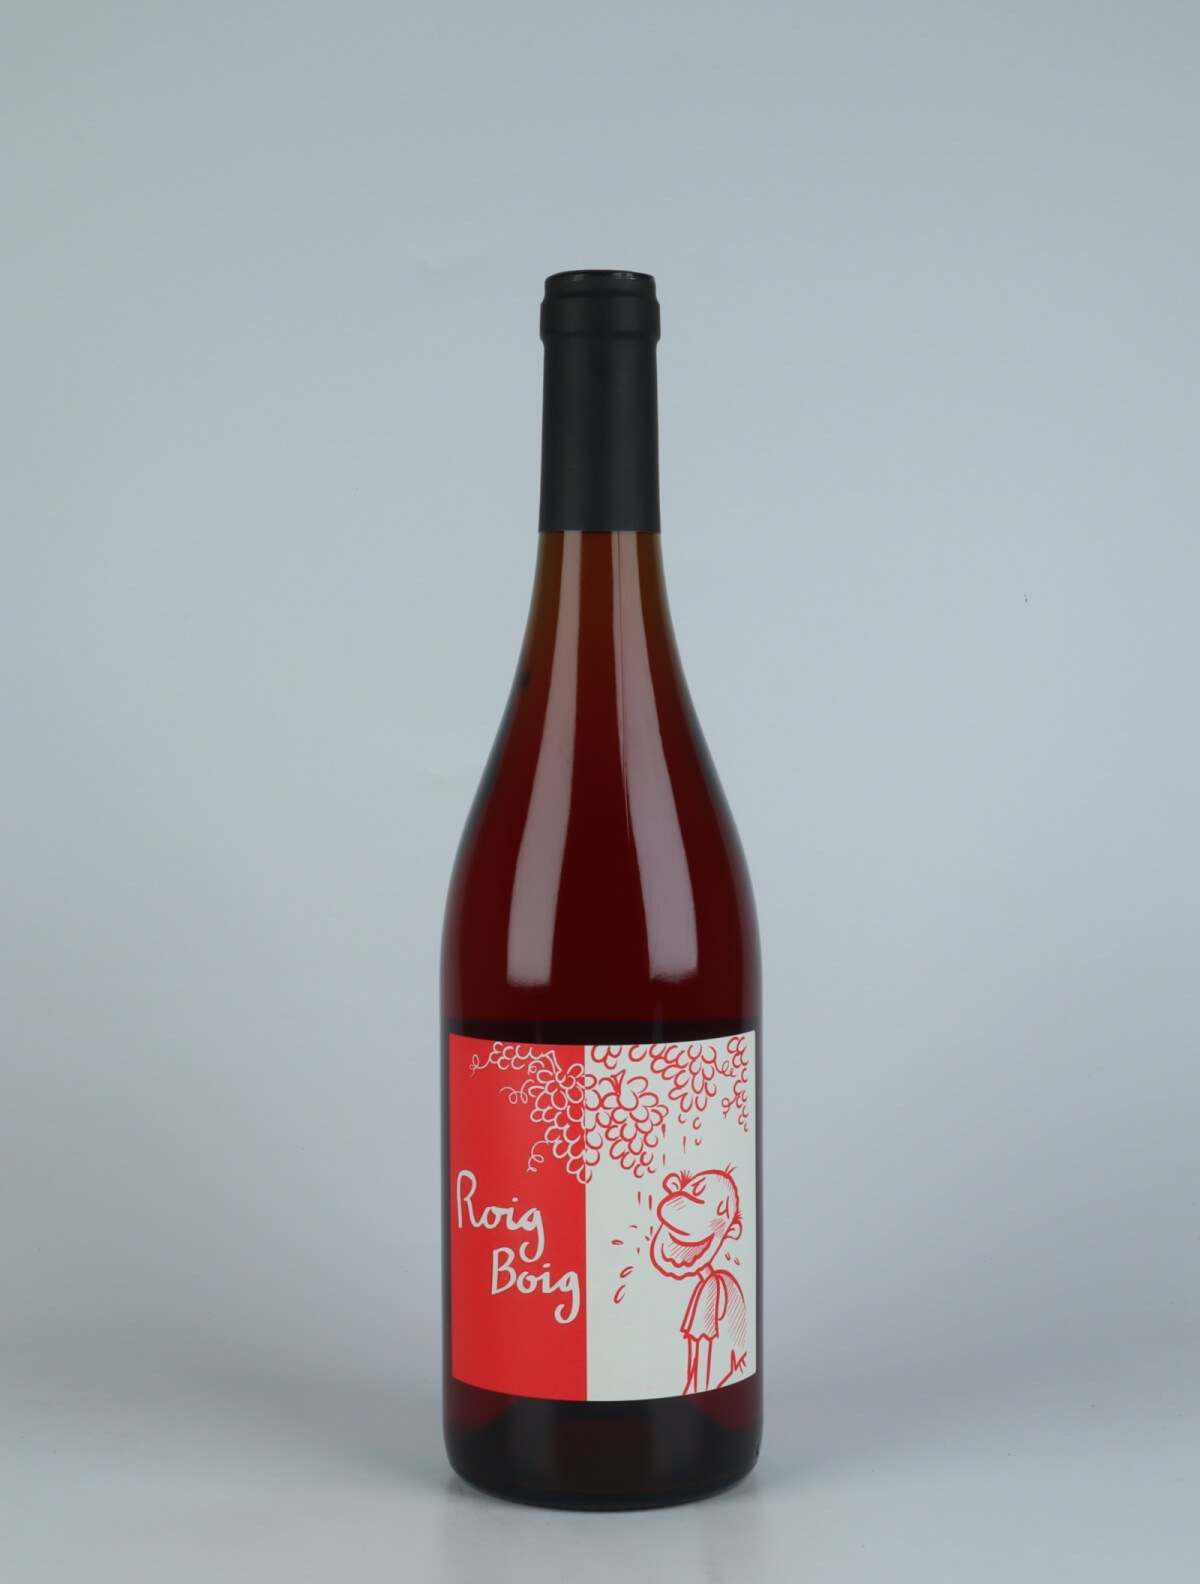 A bottle 2022 Roig Boig  - Tranquil Rosé from Celler la Salada, Penedès in Spain